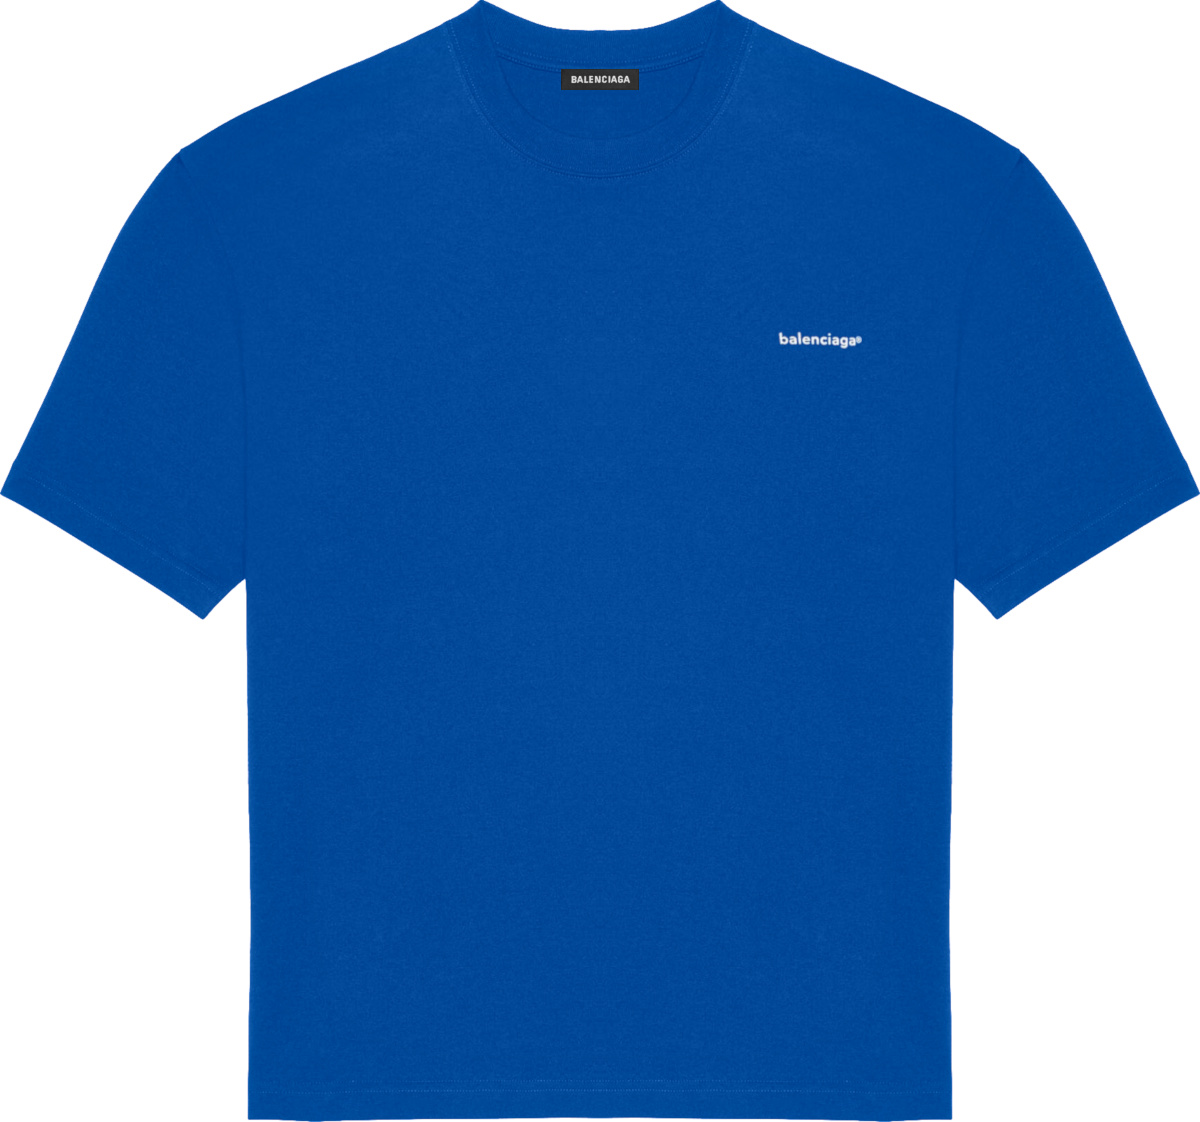 Balenciaga Blue 'Copyright' T-Shirt | Incorporated Style